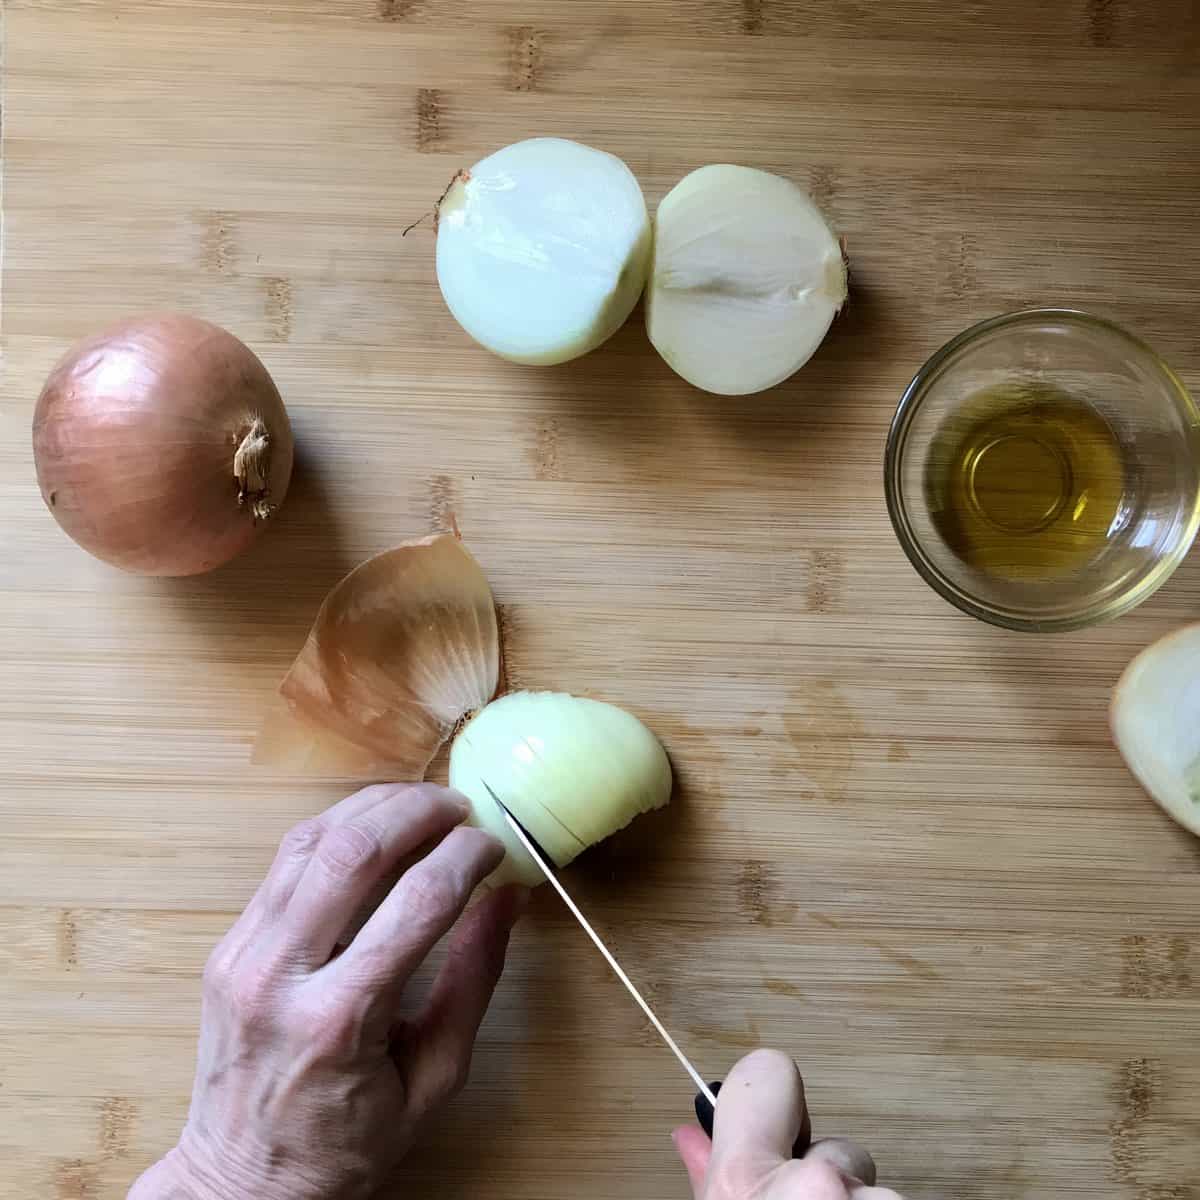 A half onion being sliced. 